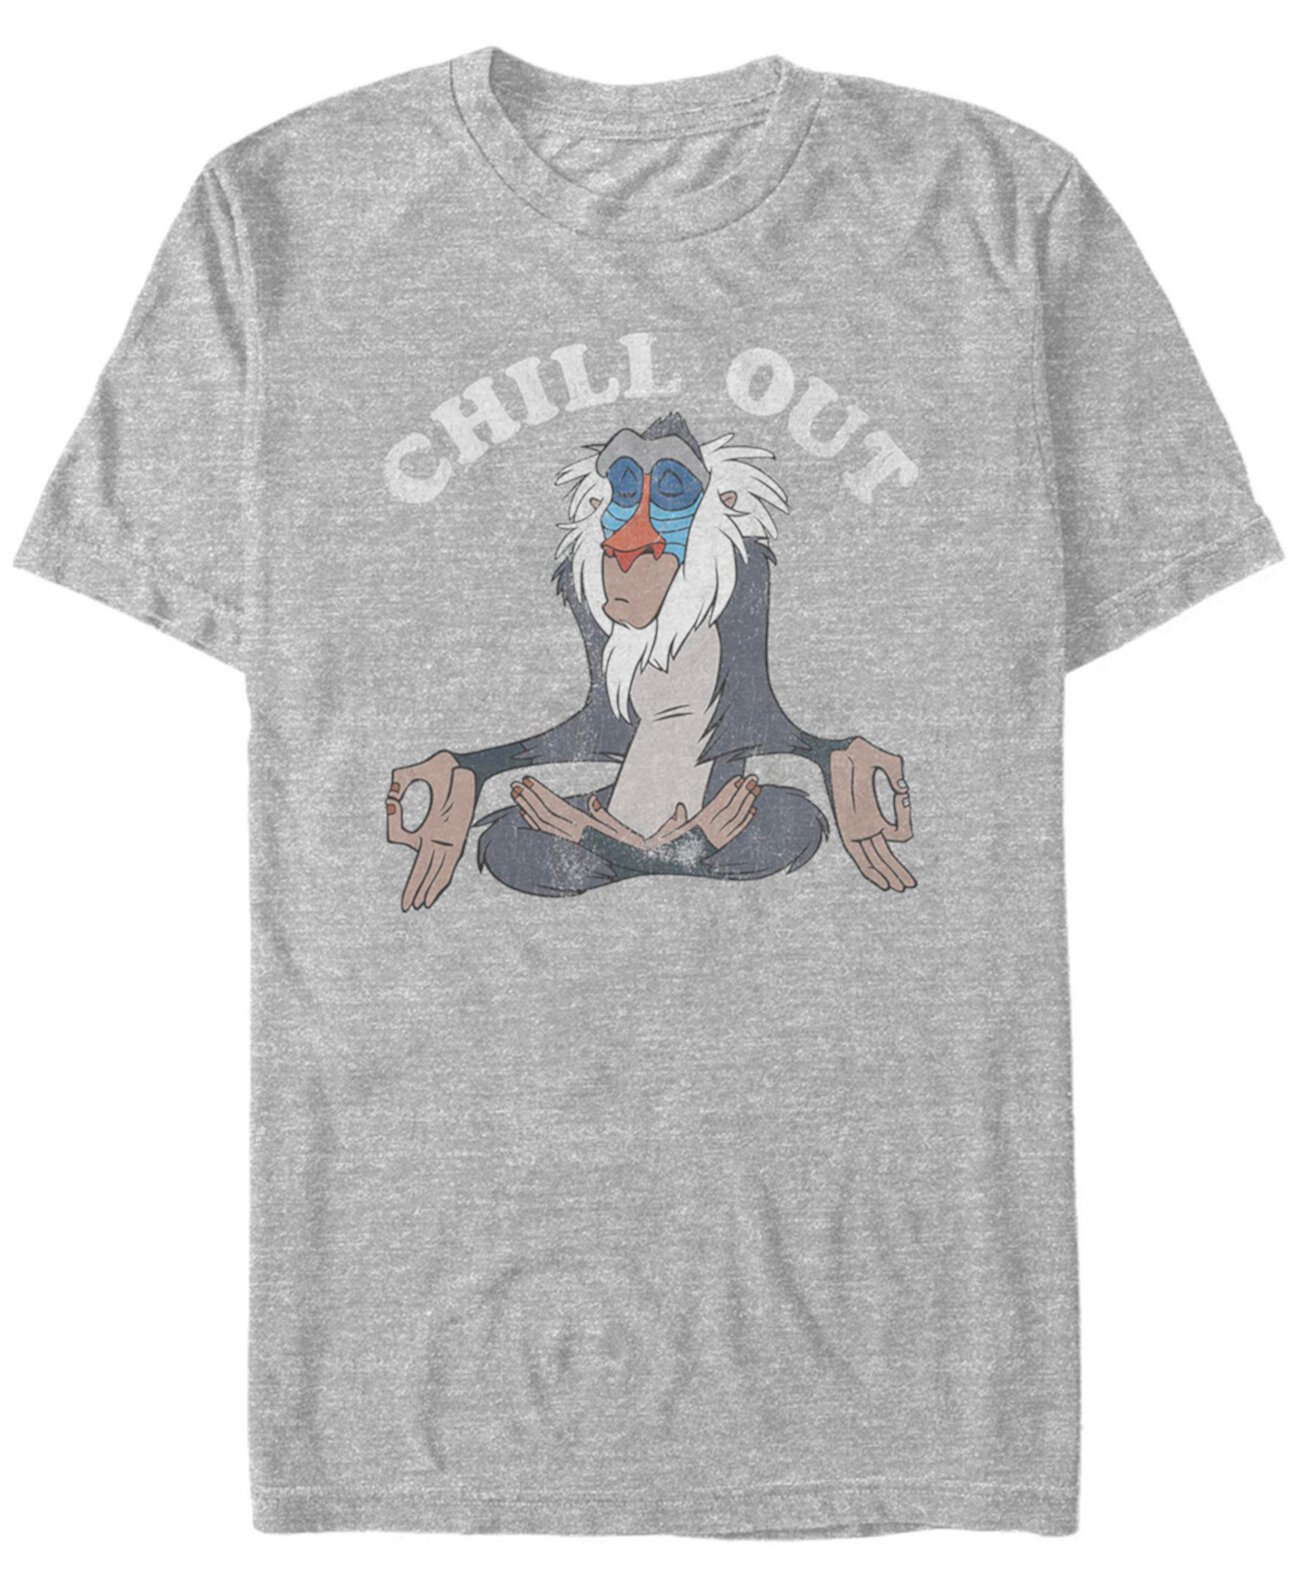 Мужская футболка Disney Lion King Rafiki Chill Out для медитации с коротким рукавом FIFTH SUN